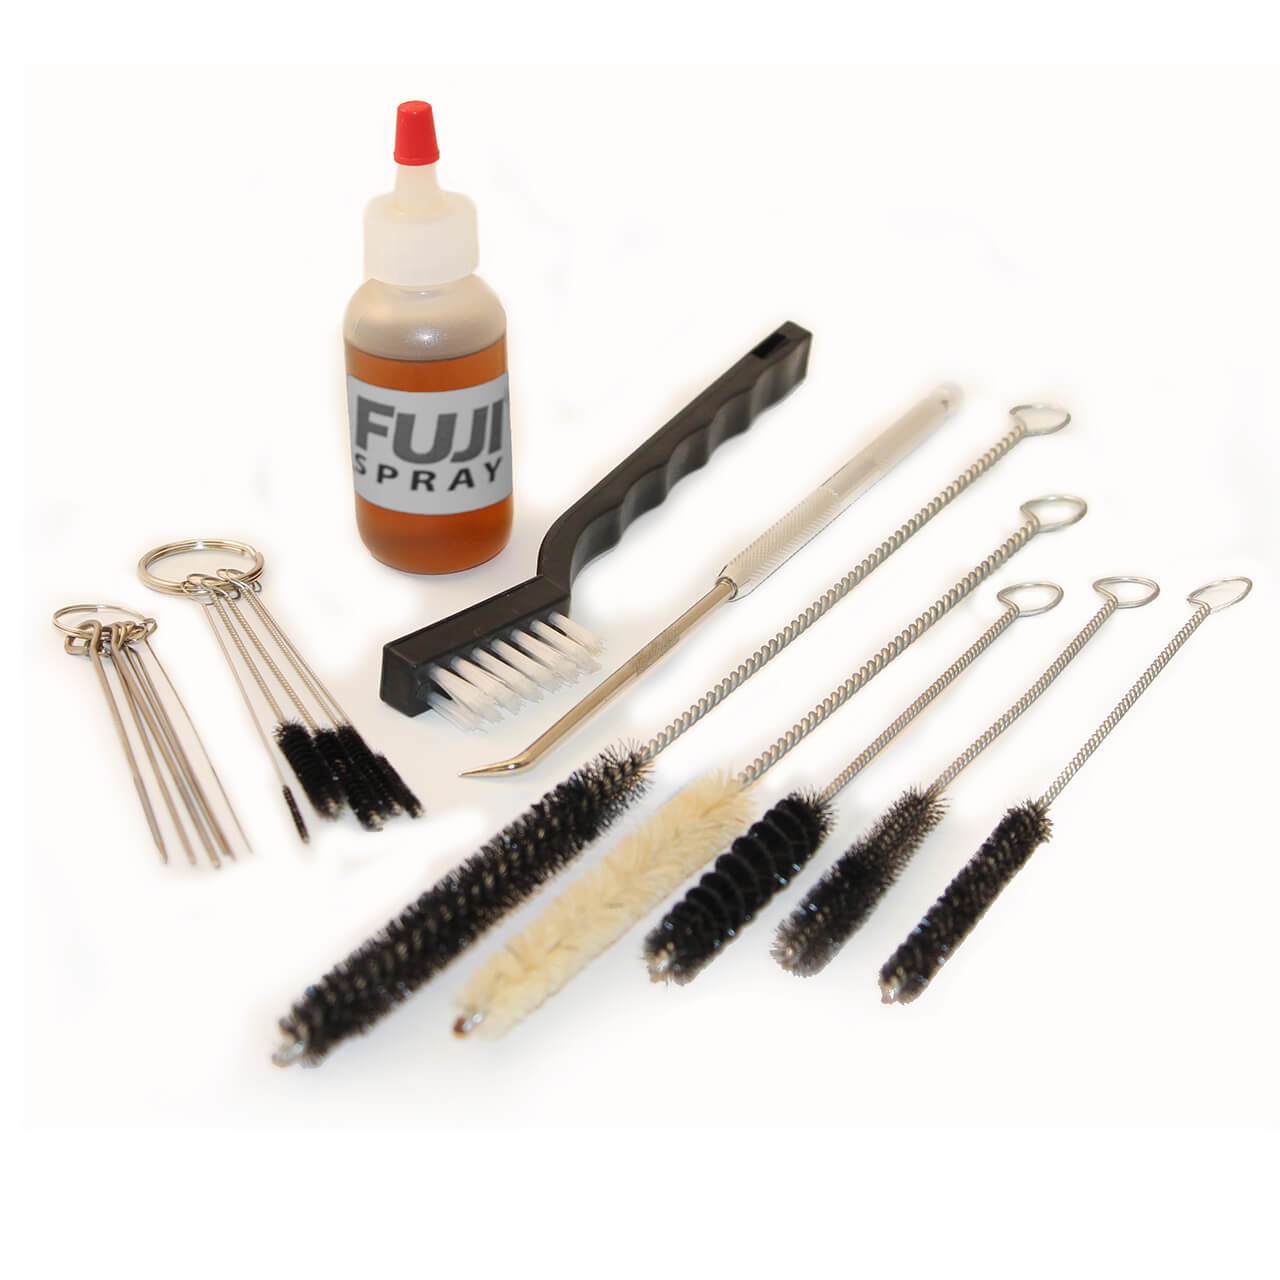 Fuji Spray 19pc Spray Gun Cleaning Kit